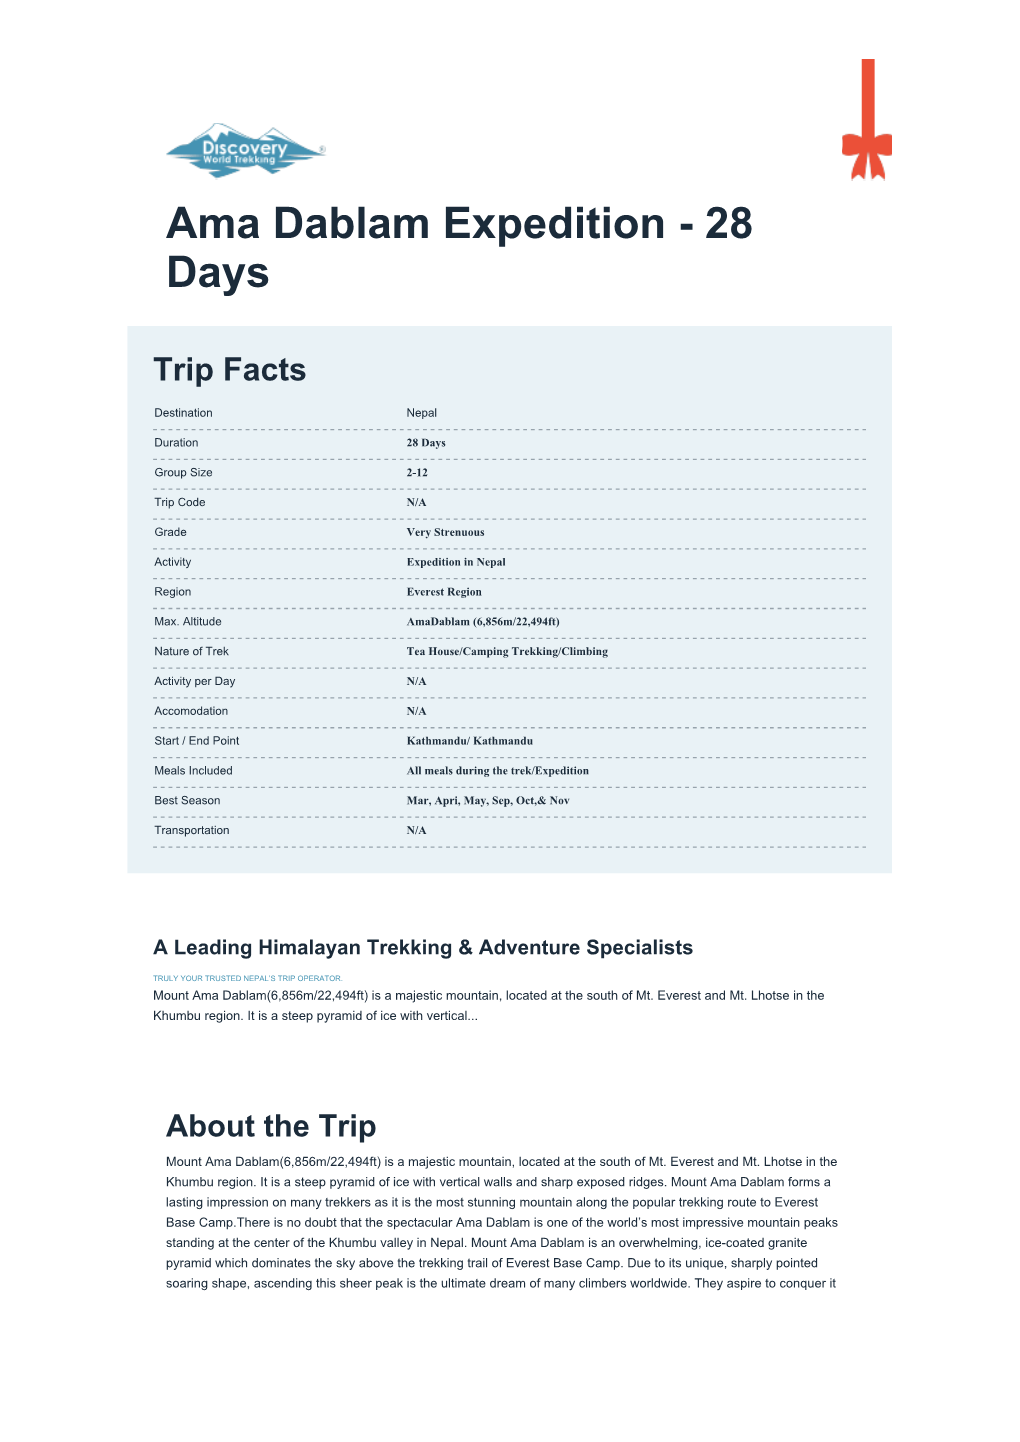 Ama Dablam Expedition - 28 Days